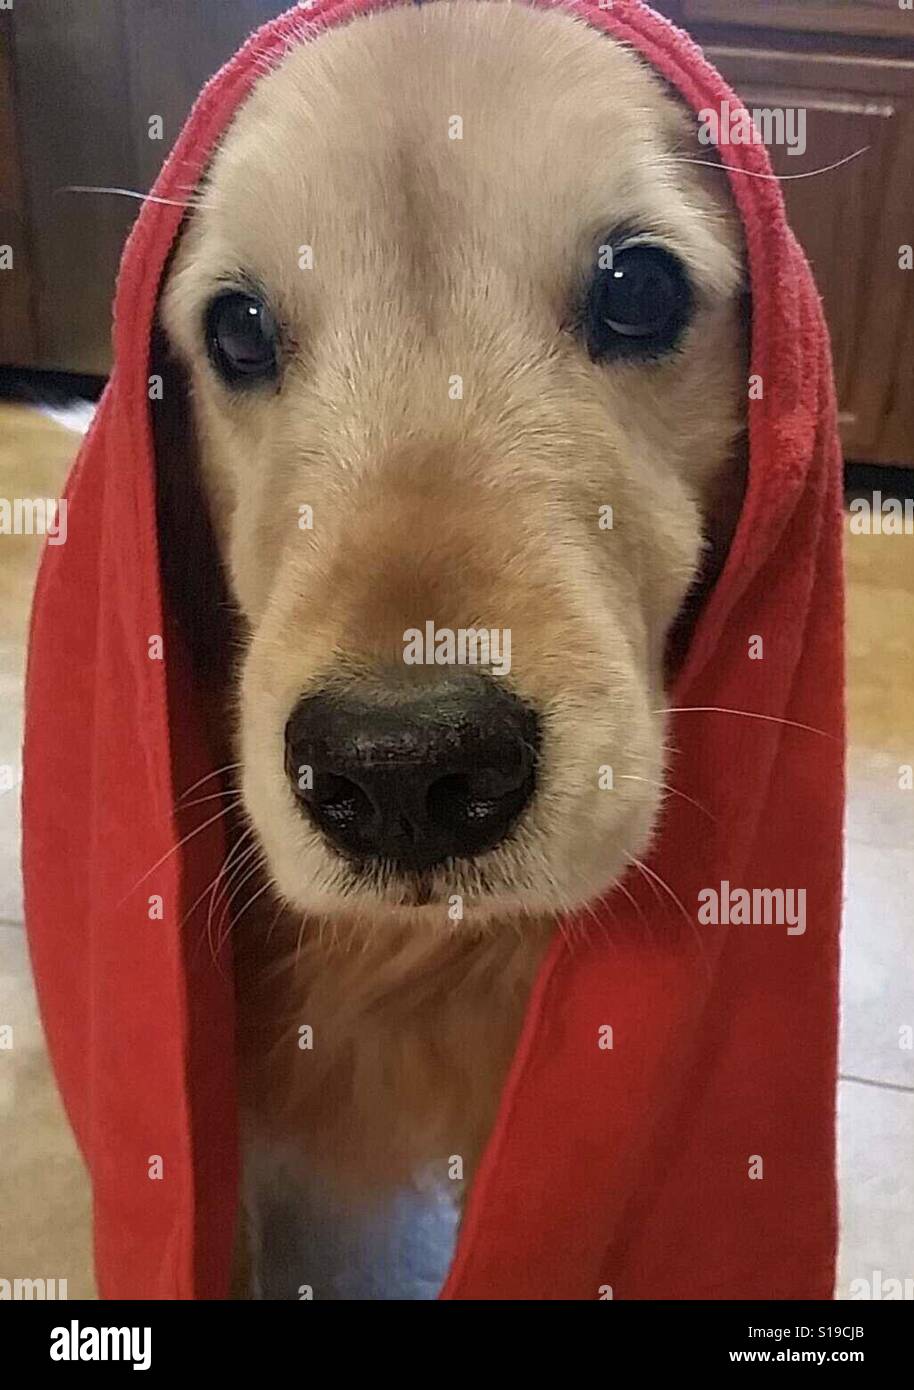 Cute Golden Retriever Dog avec Red Towel on Head Banque D'Images